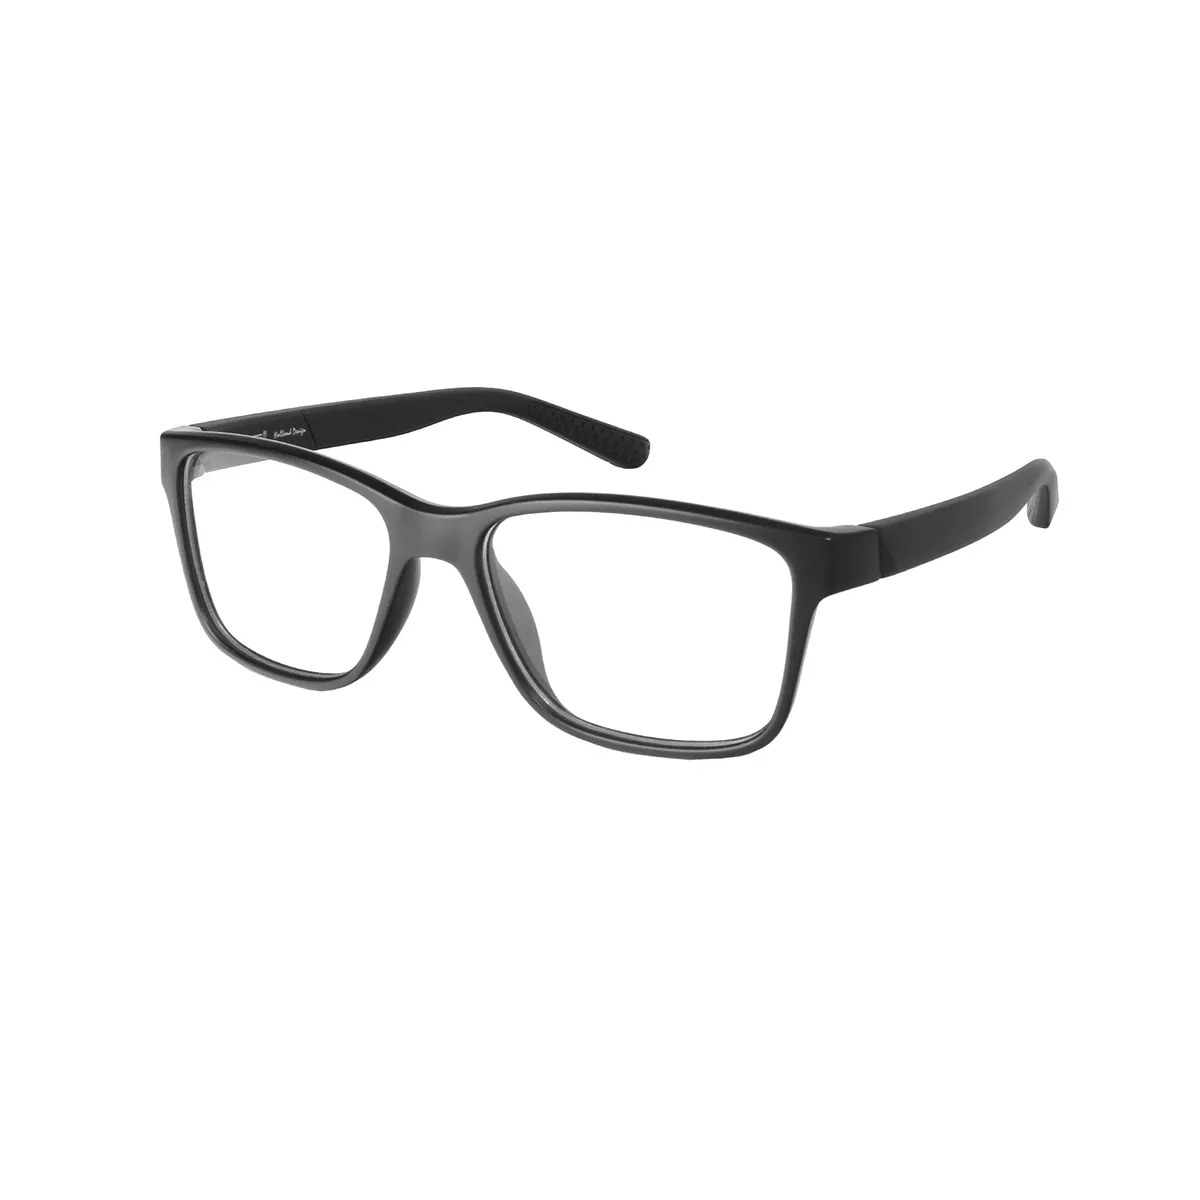 Jamison - Square Black Glasses for Men - EFE